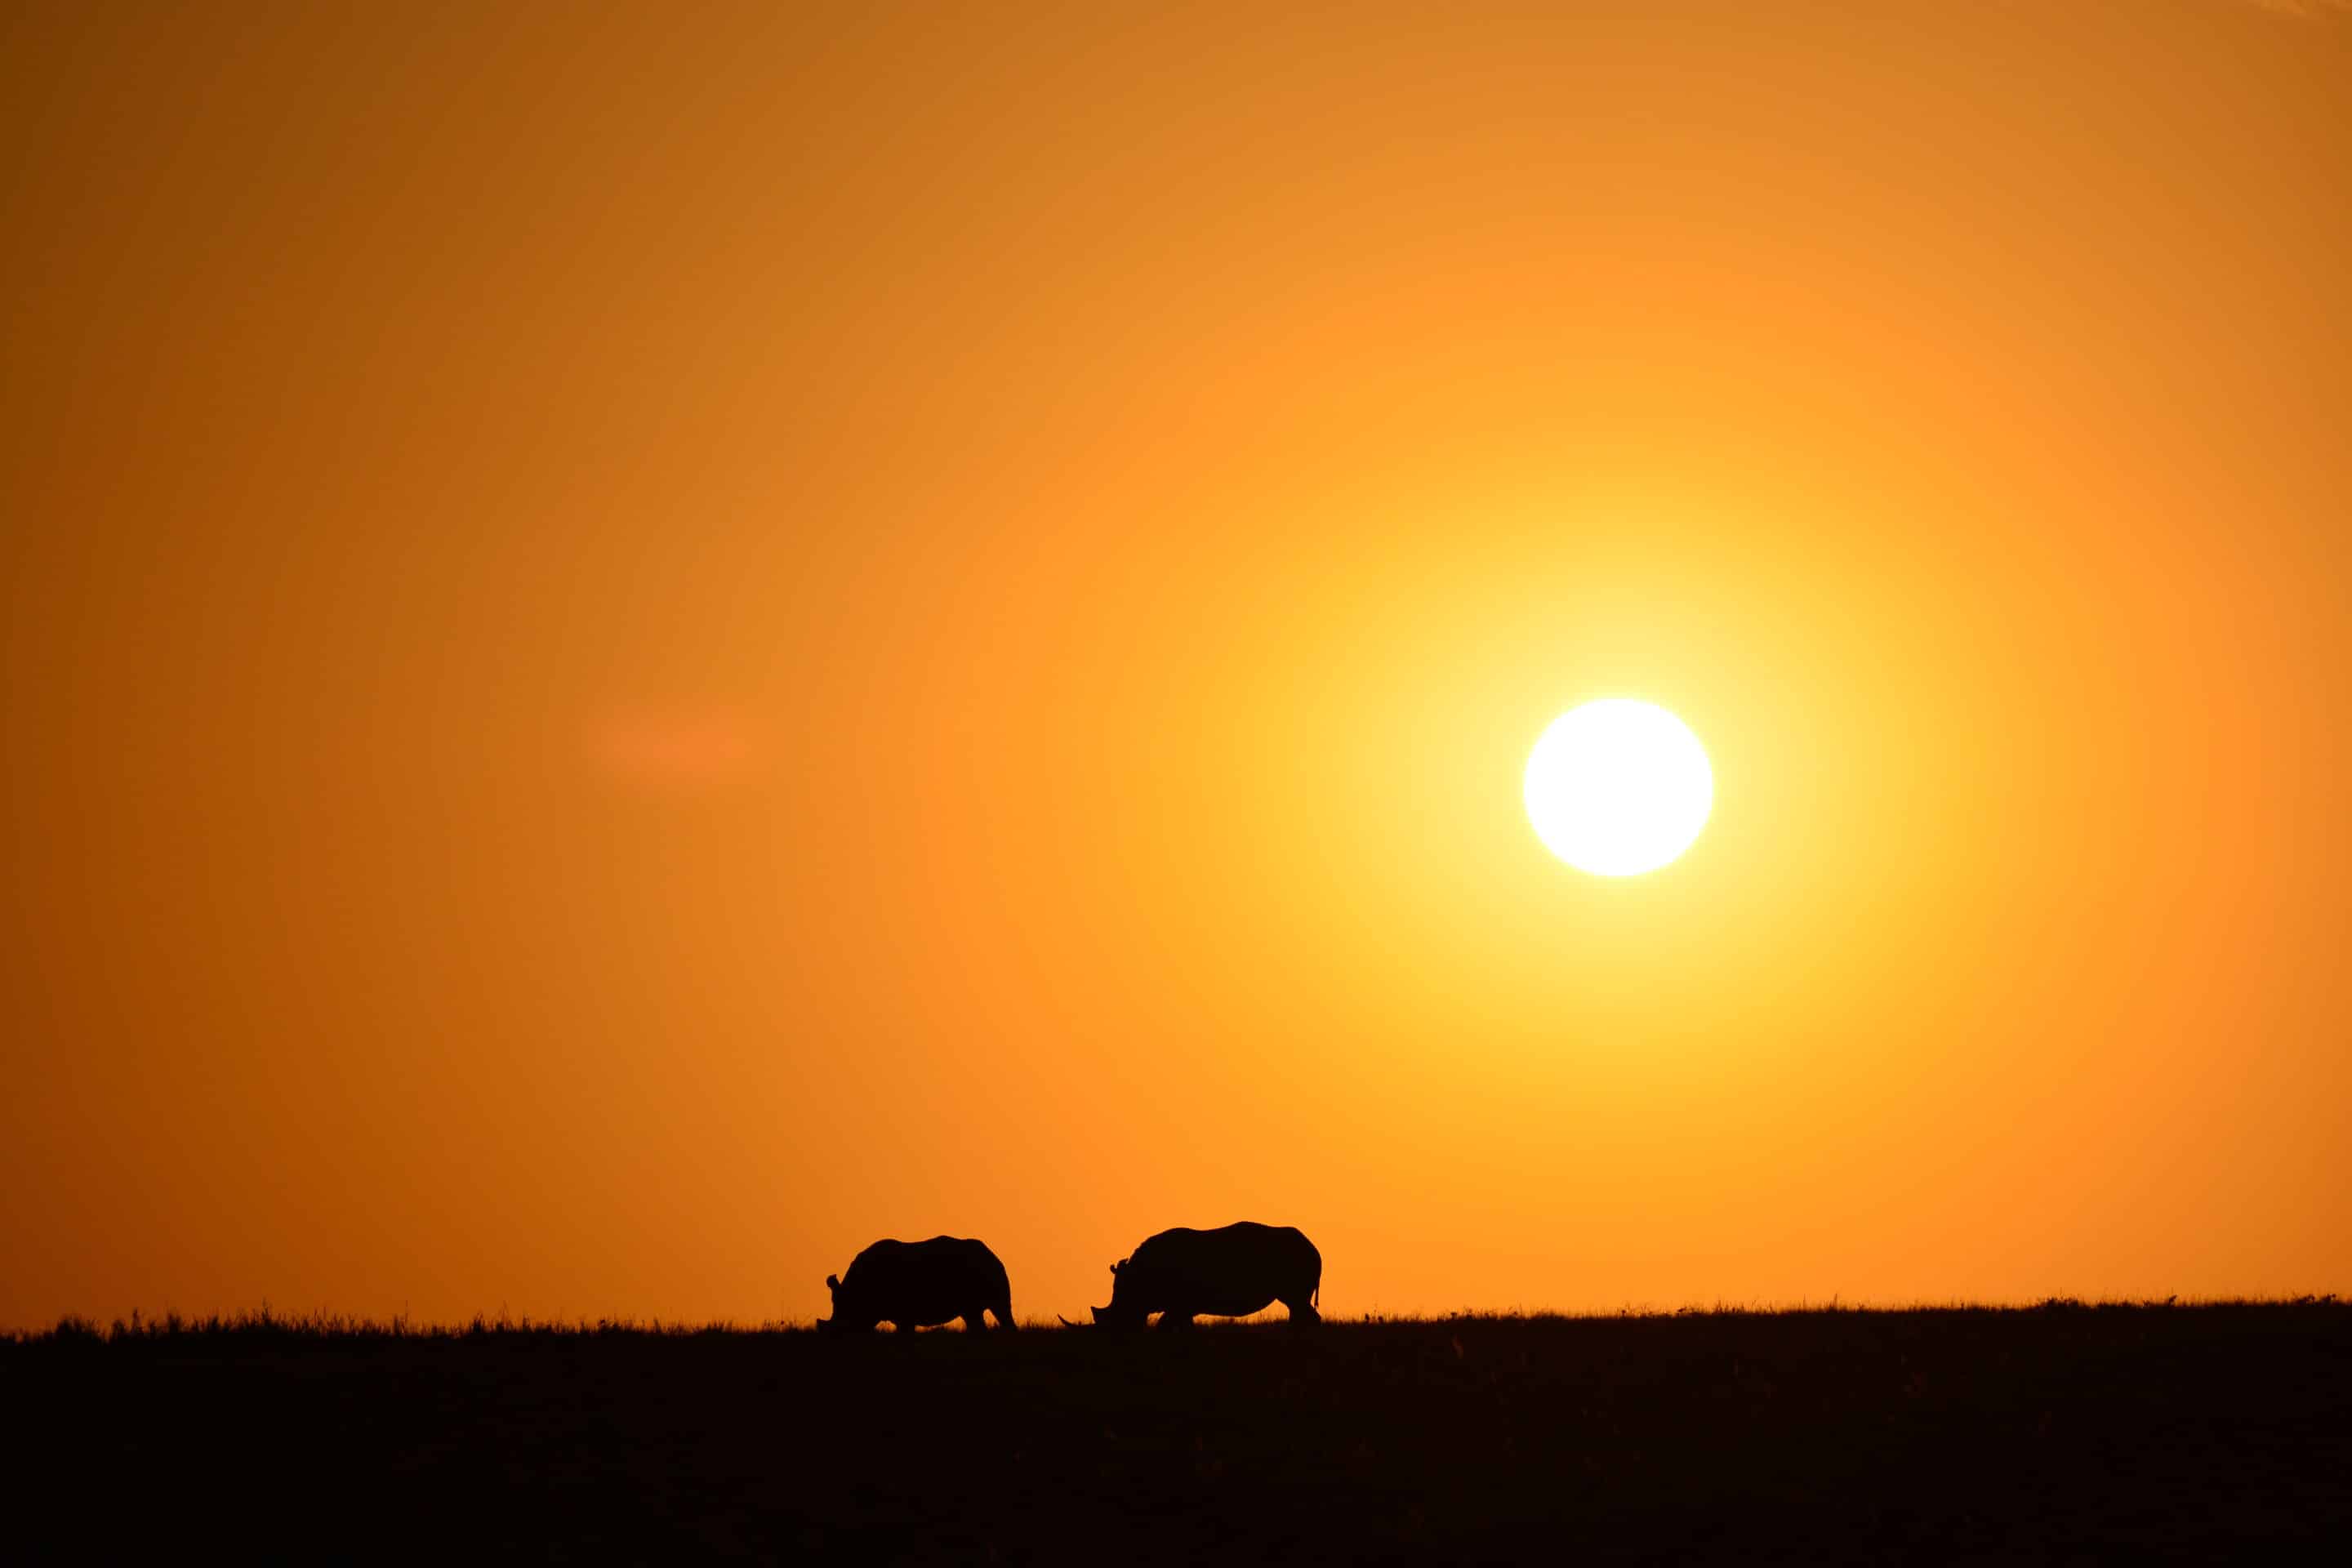 Two rhinos at sunset